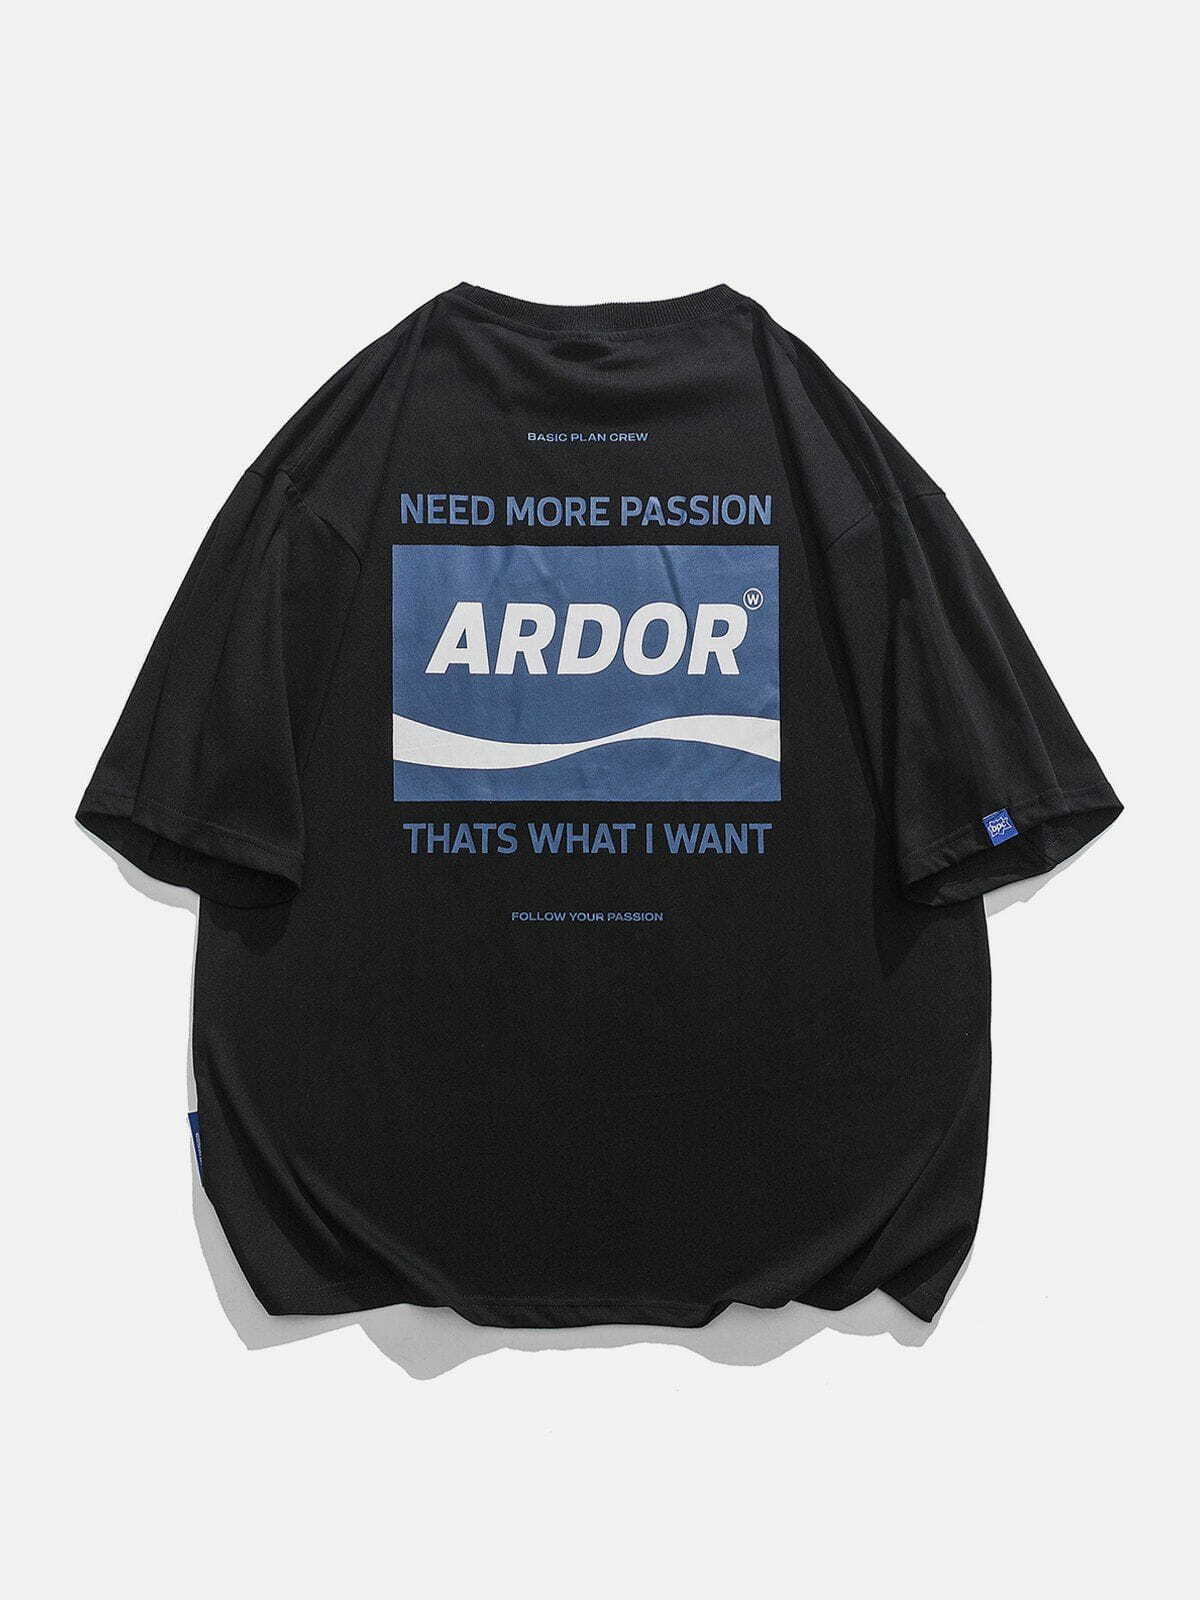 revolutionary ardor print tee edgy  retro streetwear essential 5300